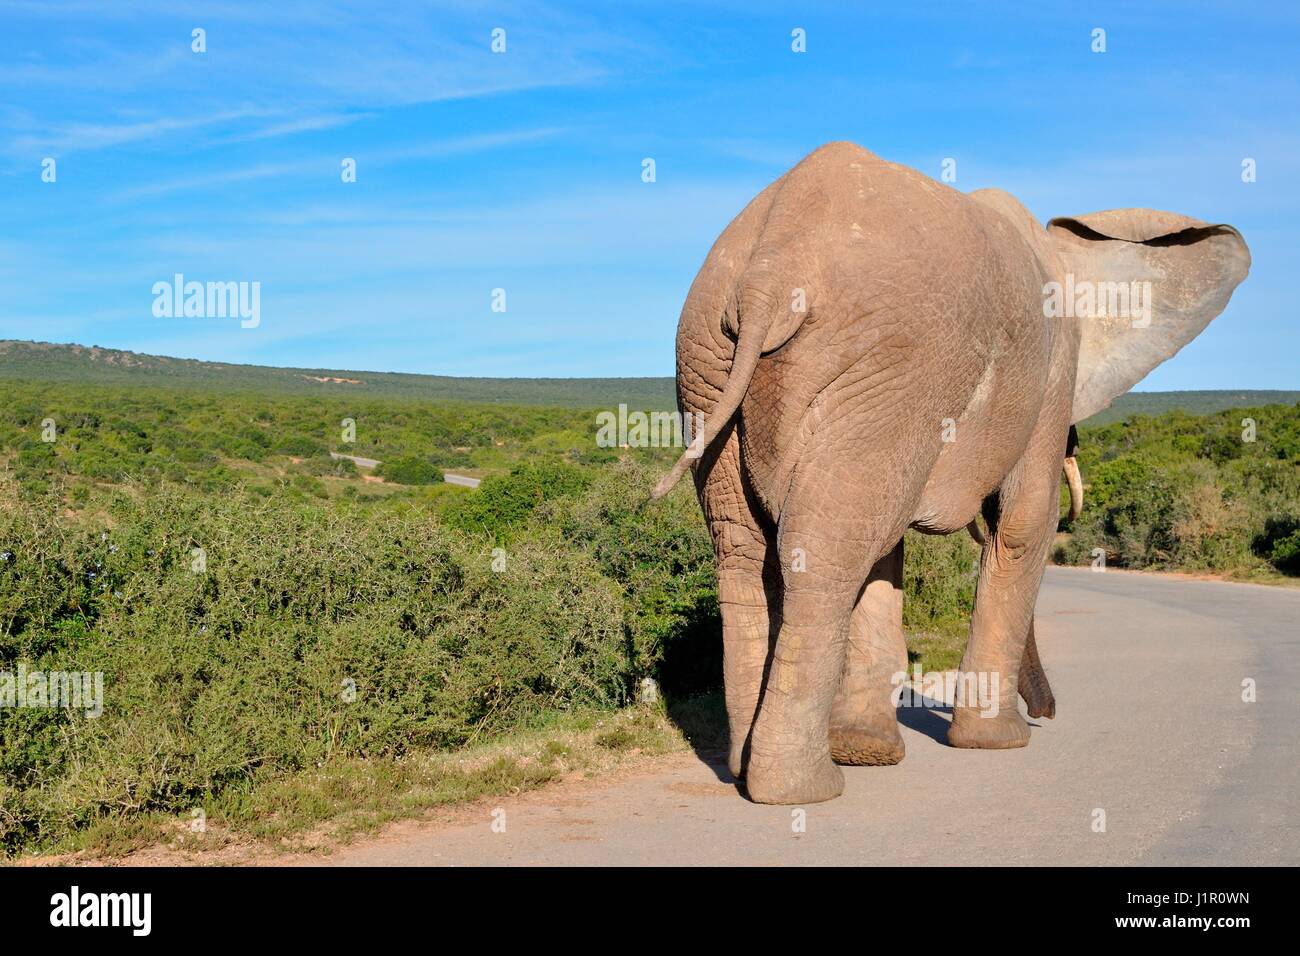 Afrikanischer Bush Elefant (Loxodonta Africana), gepflastert zu Fuß auf Bull Road, Addo Elephant National Park, Eastern Cape, Südafrika, Afrika Stockfoto